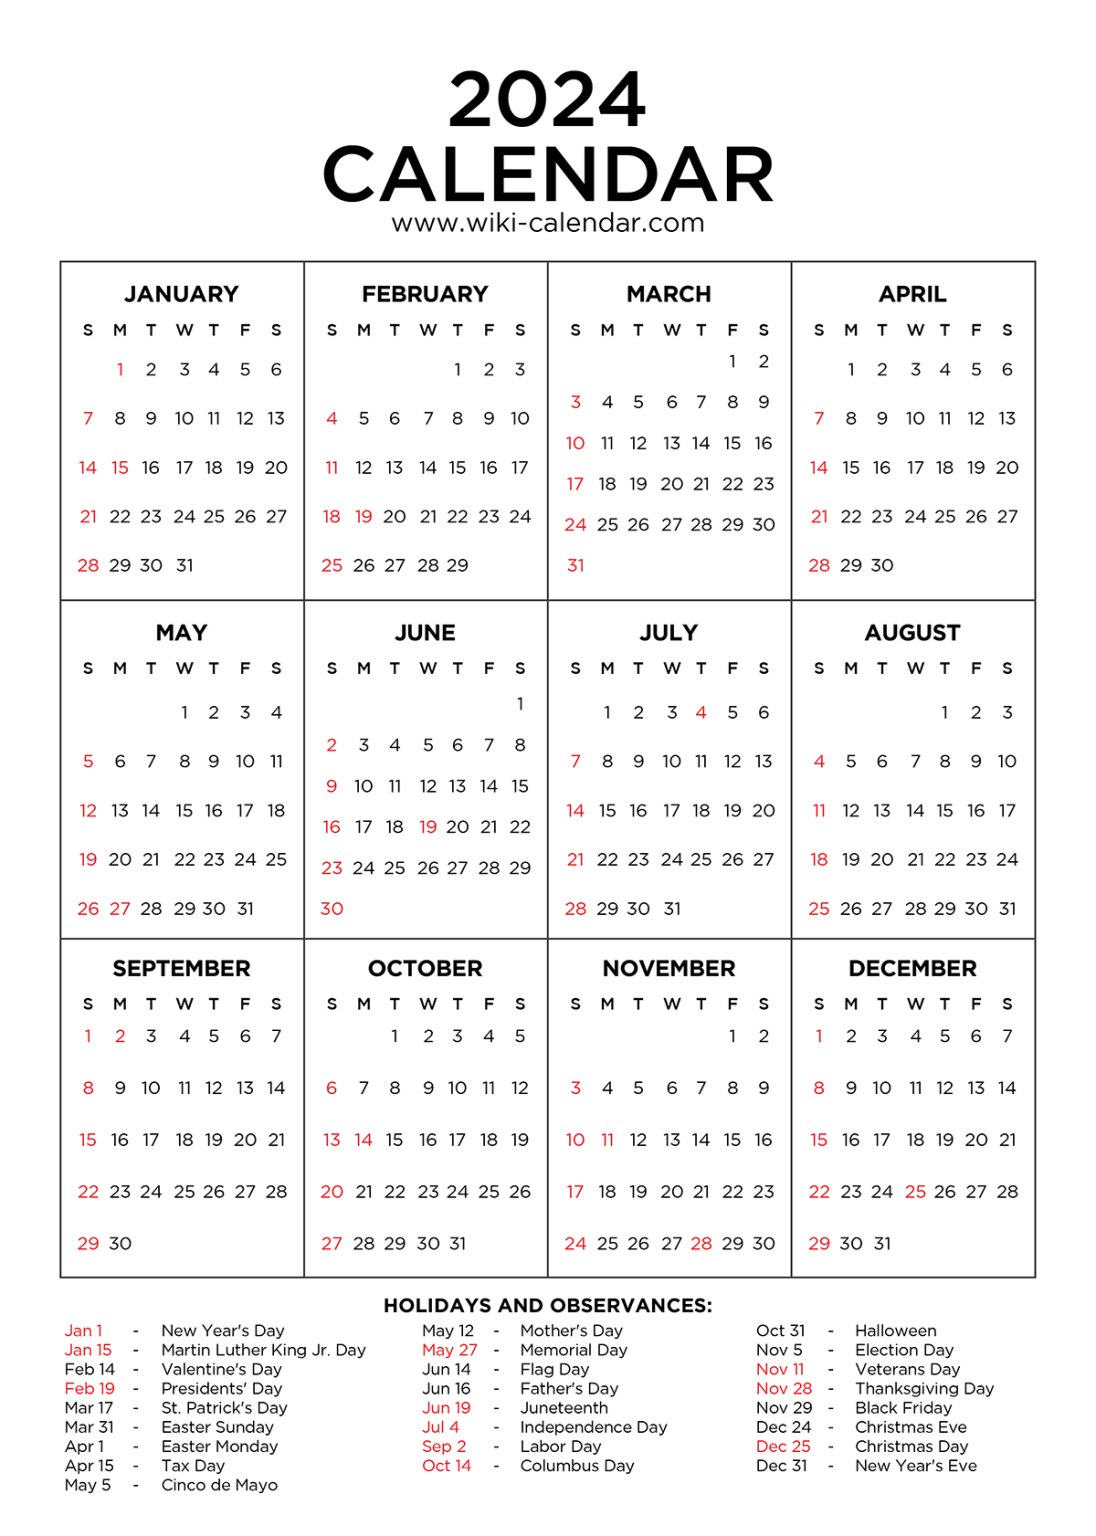 Year 2024 Calendar Printable With Holidays Wiki Calendar - Free Printable 2024 Calendar With Holidays And Lines